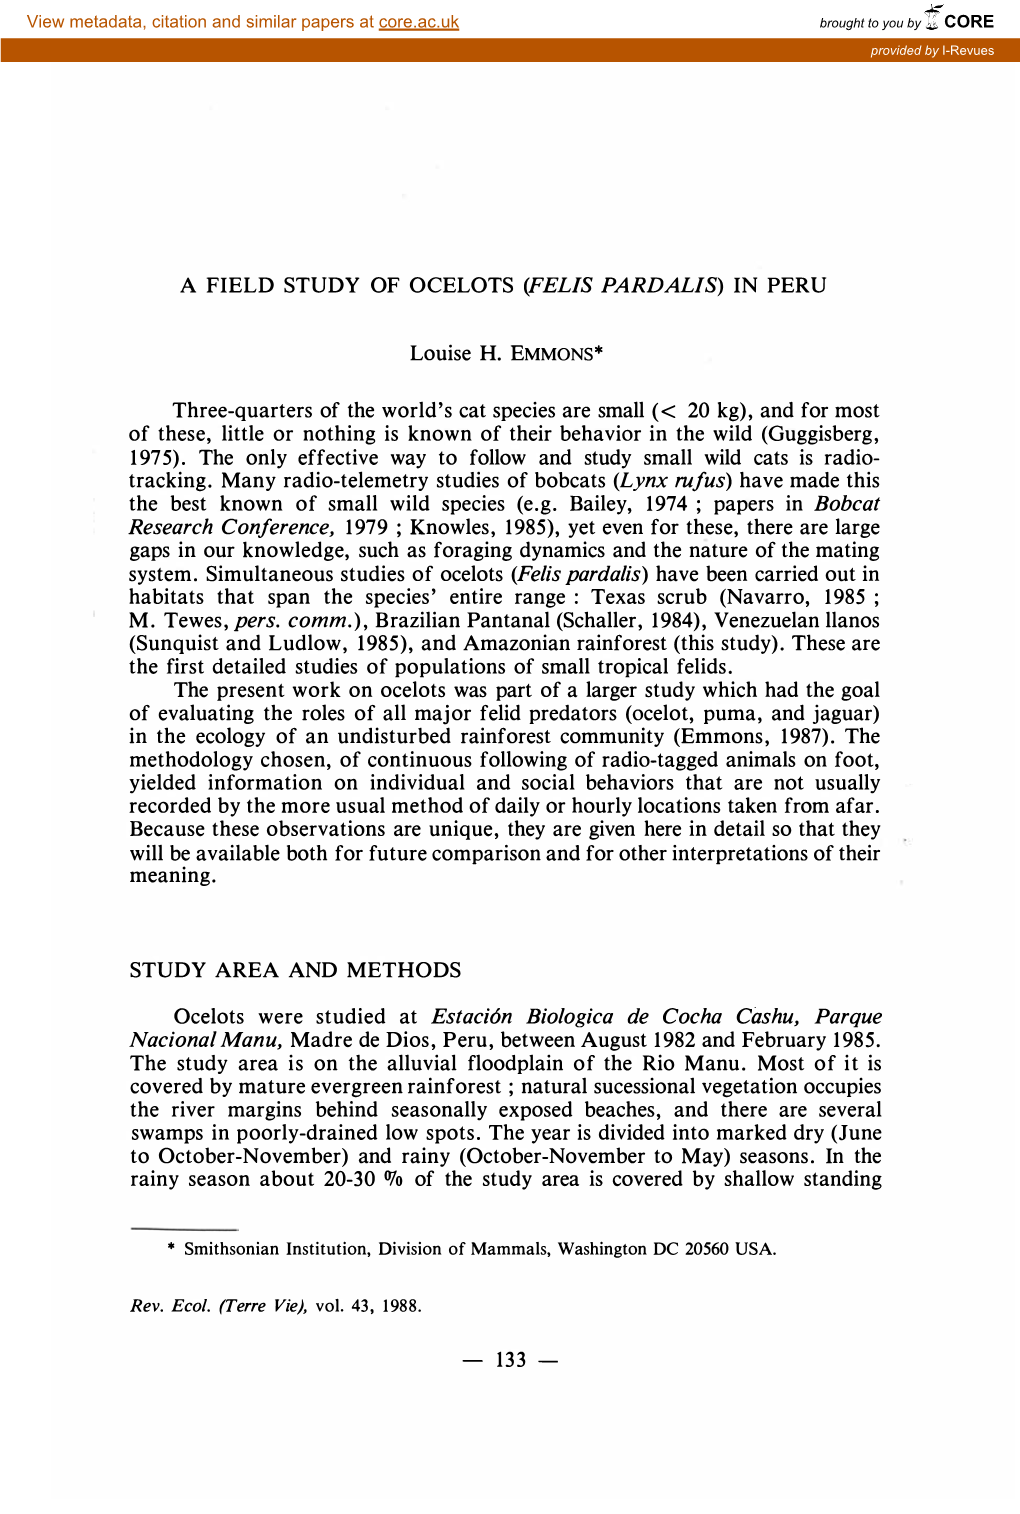 A Field Study of Ocelots (Pelis Pa Rdalis) in Peru